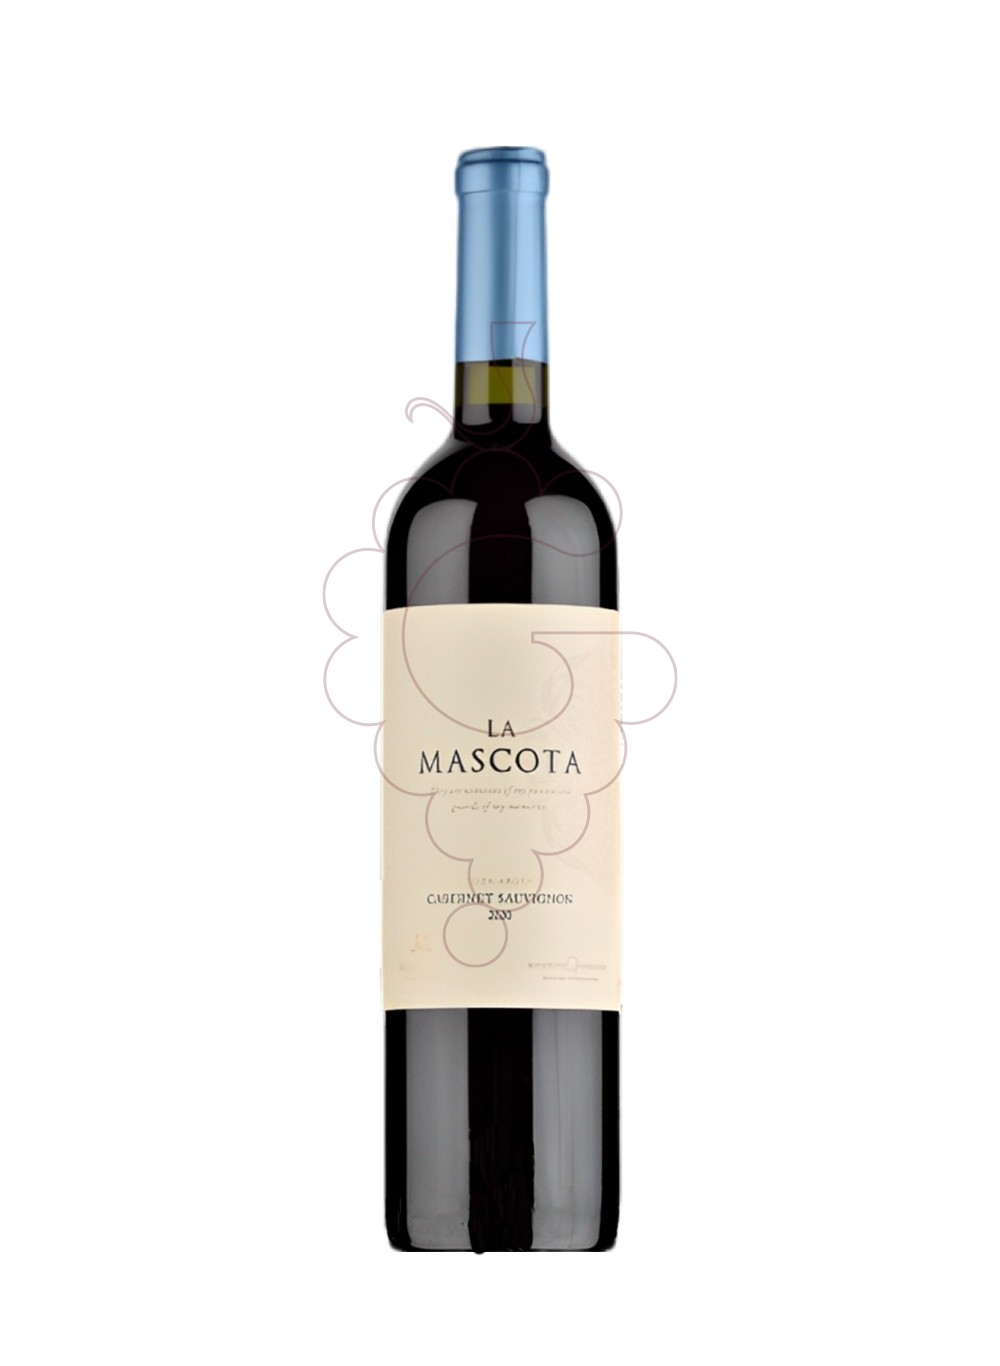 Photo La mascota cabernet 2020 75 cl red wine